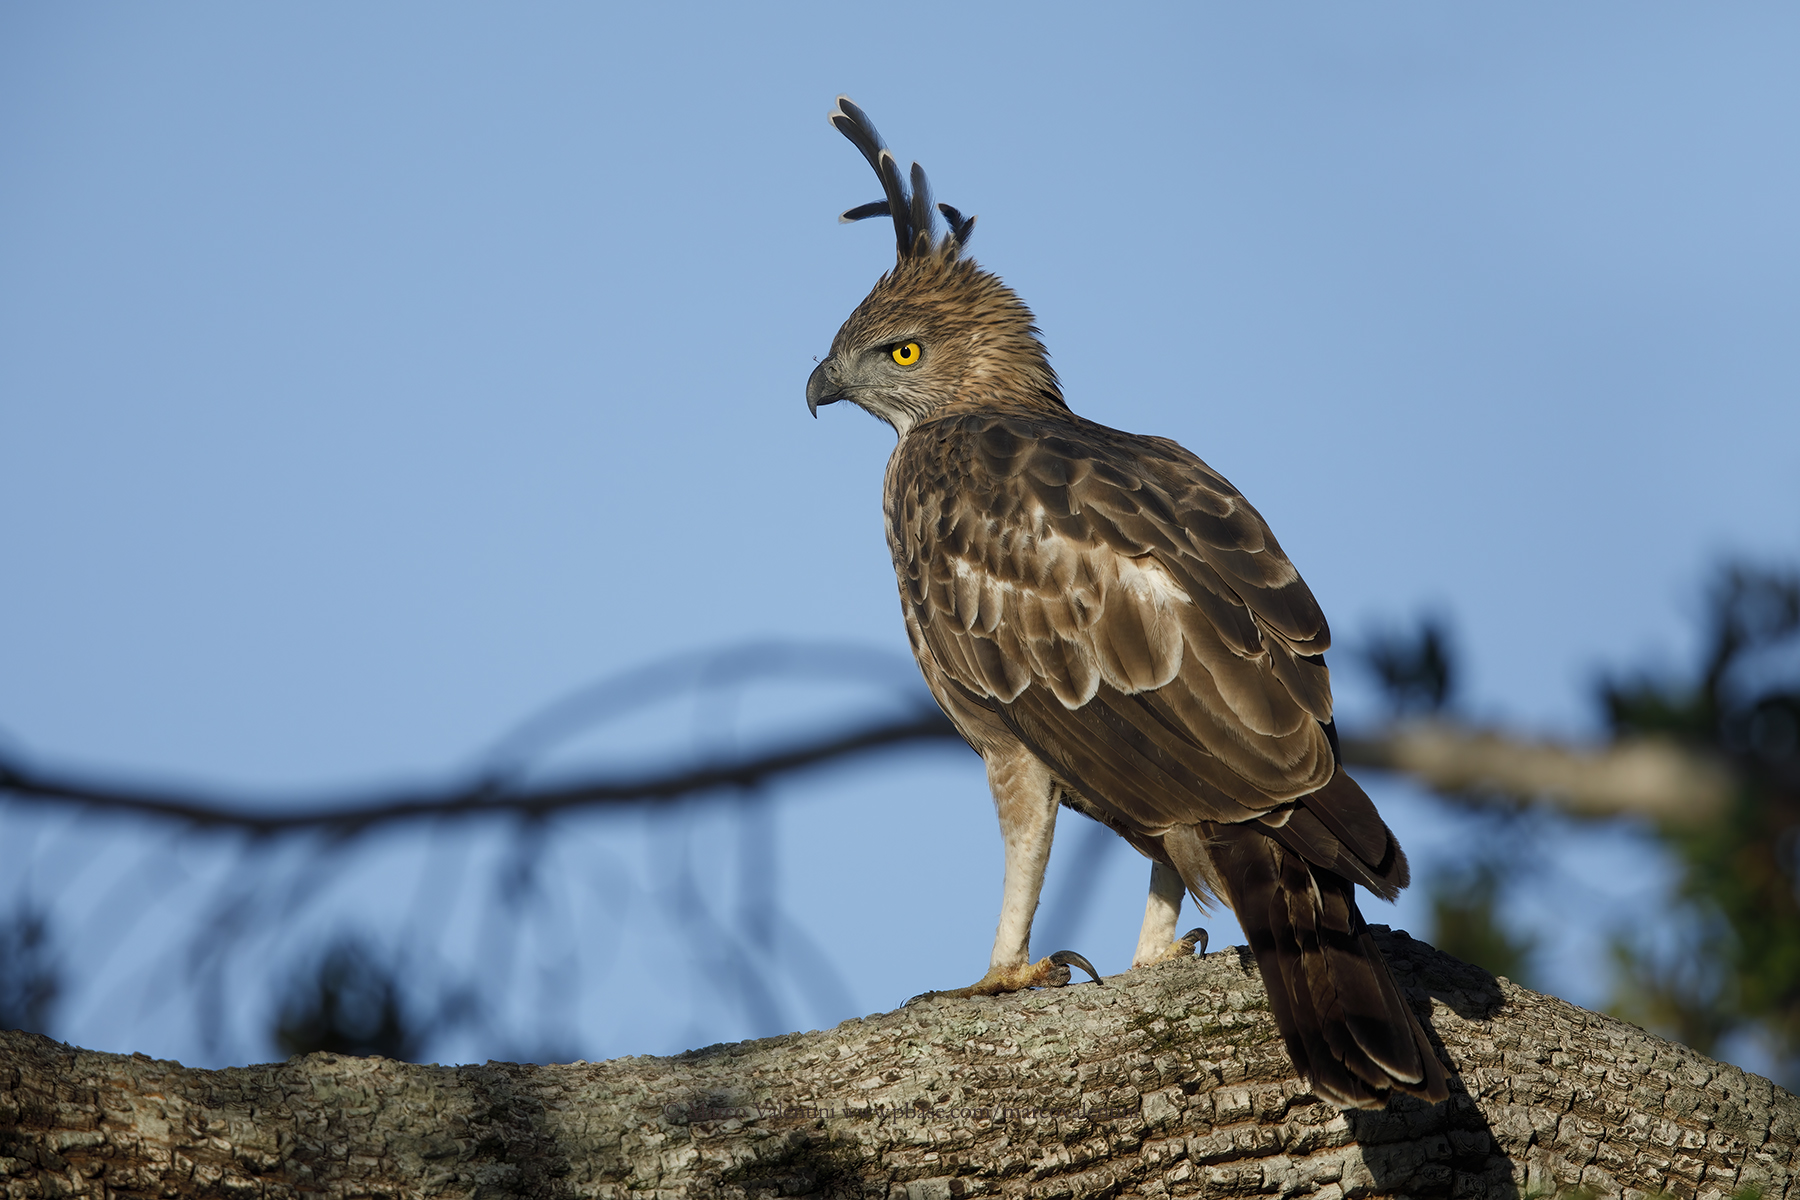 Changeable Hawk-eagle - Spizaetus cirrhatus